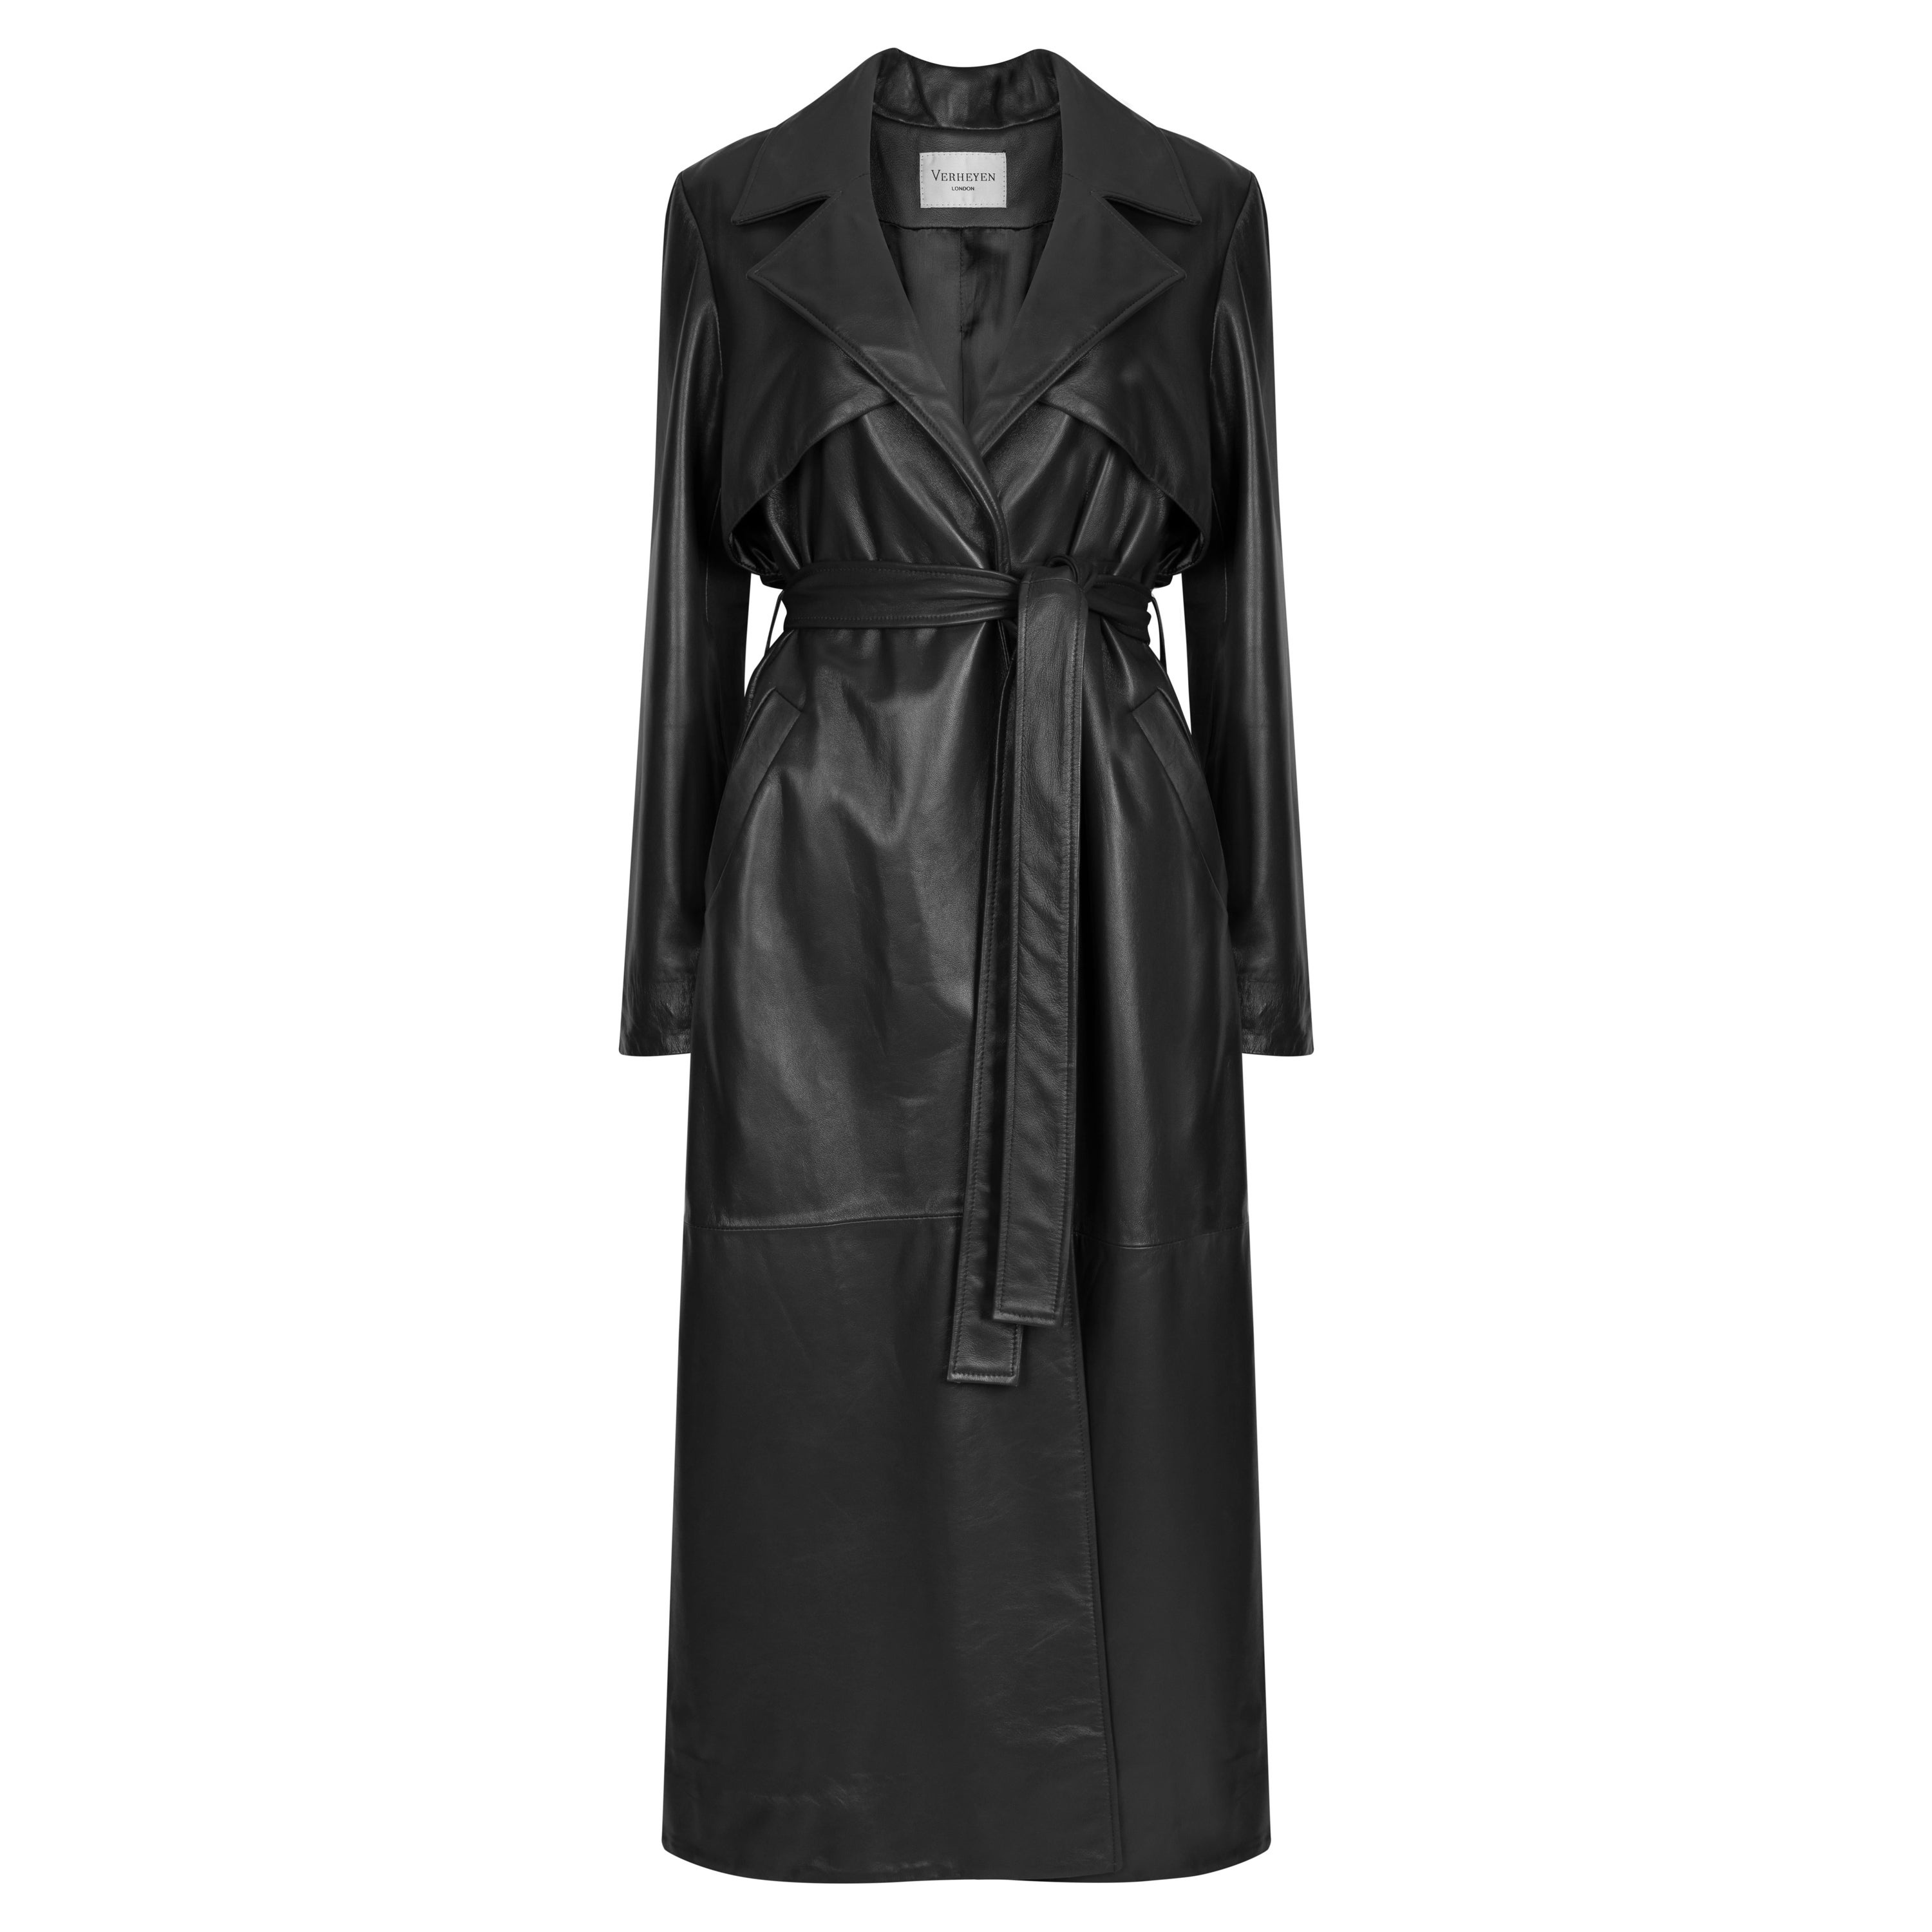 Verheyen London Leather Trench Coat in Black  - Size uk 14 For Sale